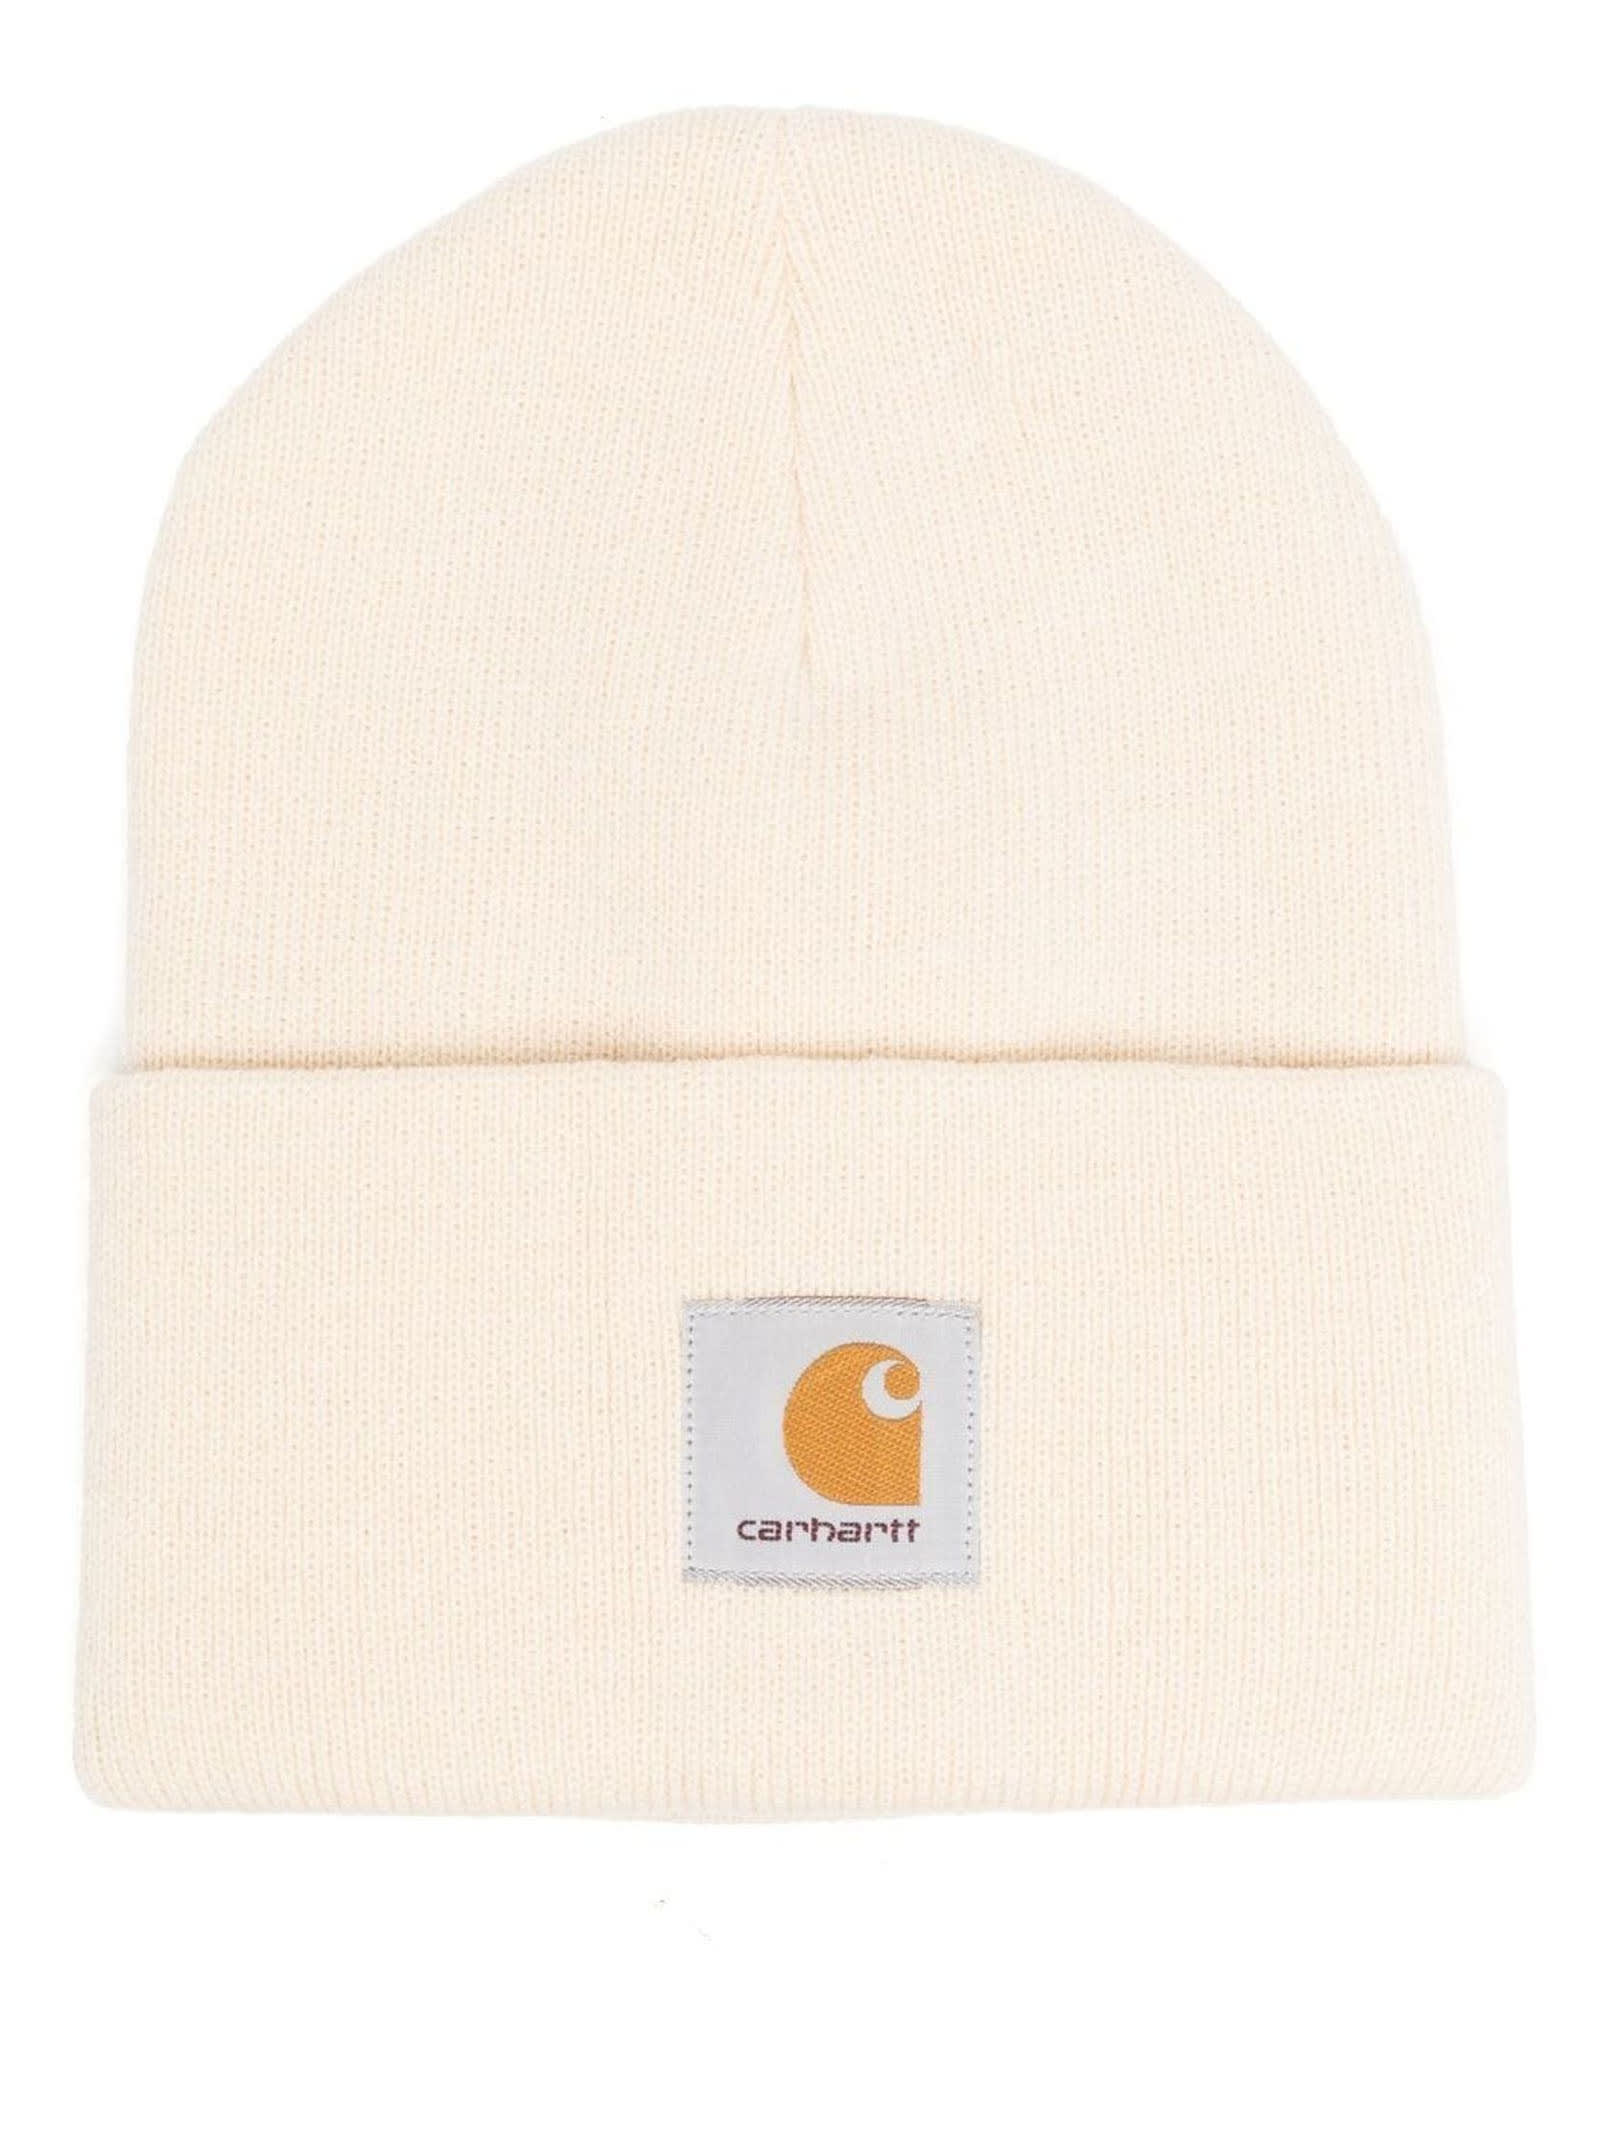 Carhartt Cream Beanie Hat